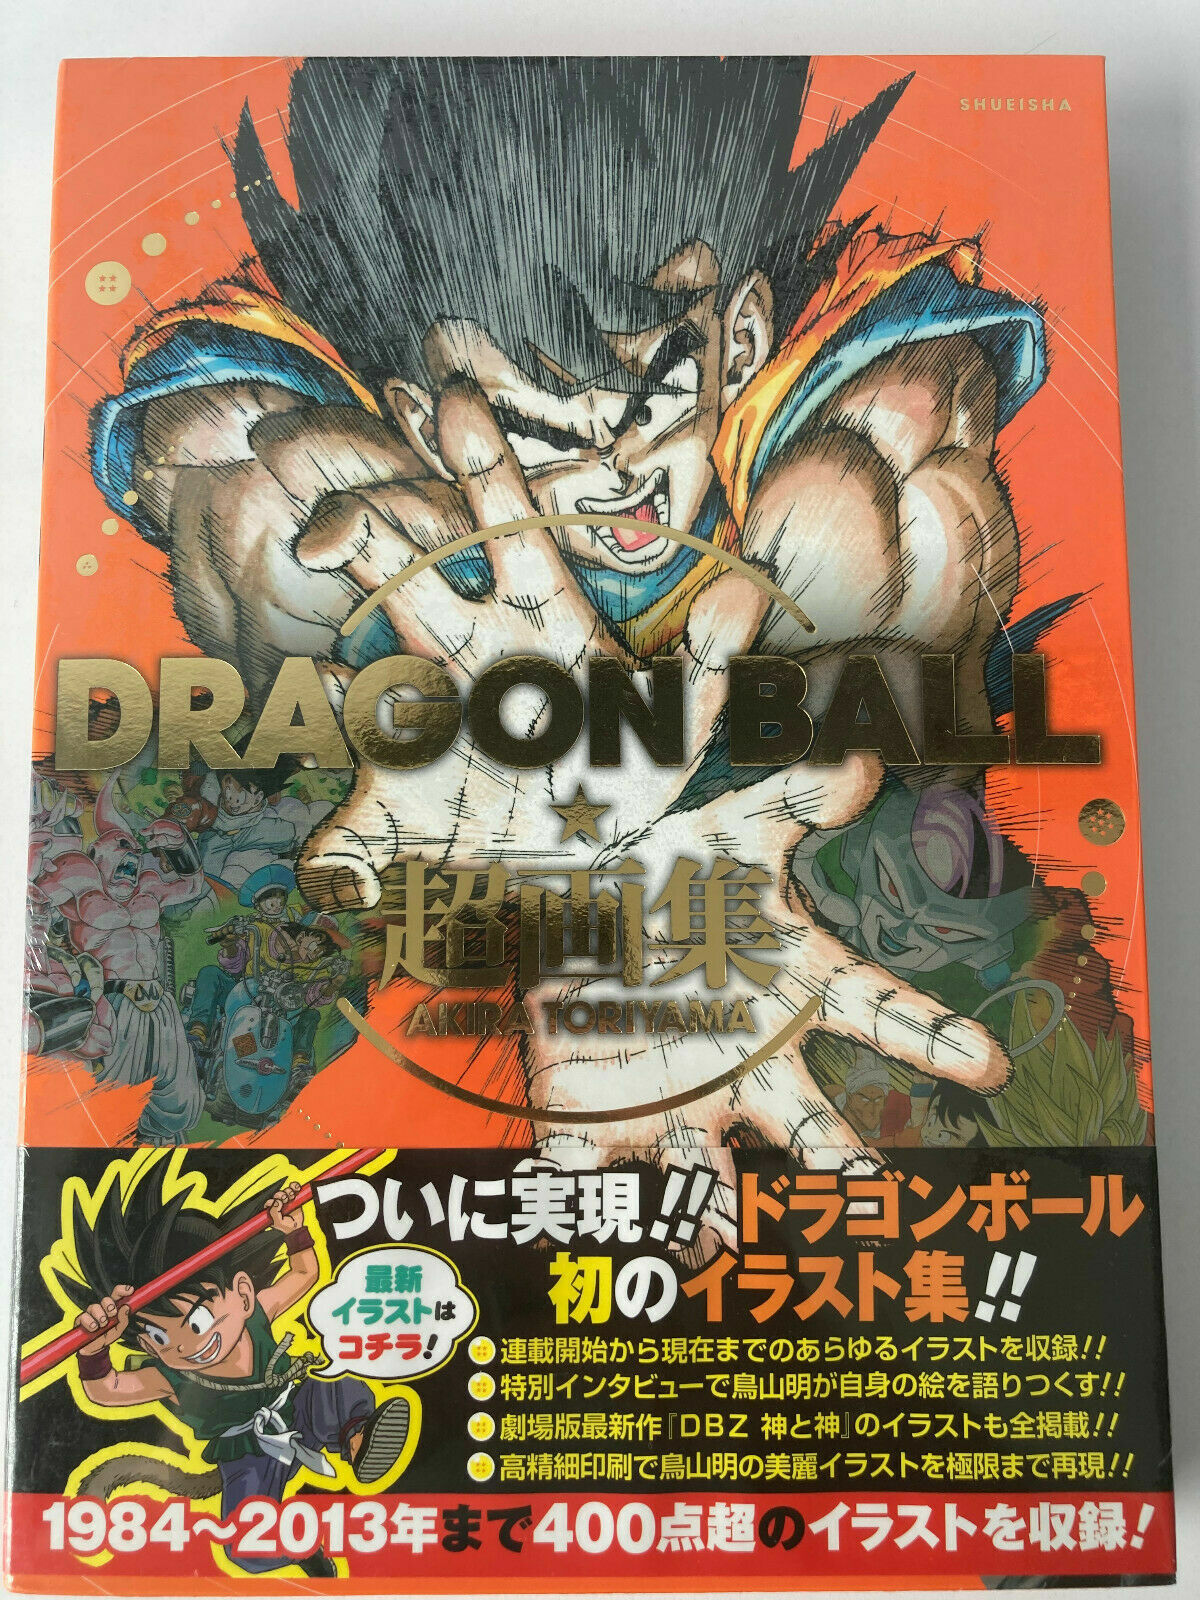 NEW SEALED Dragon Ball Akira Toriyama 1984 - 2013 Super Art Book